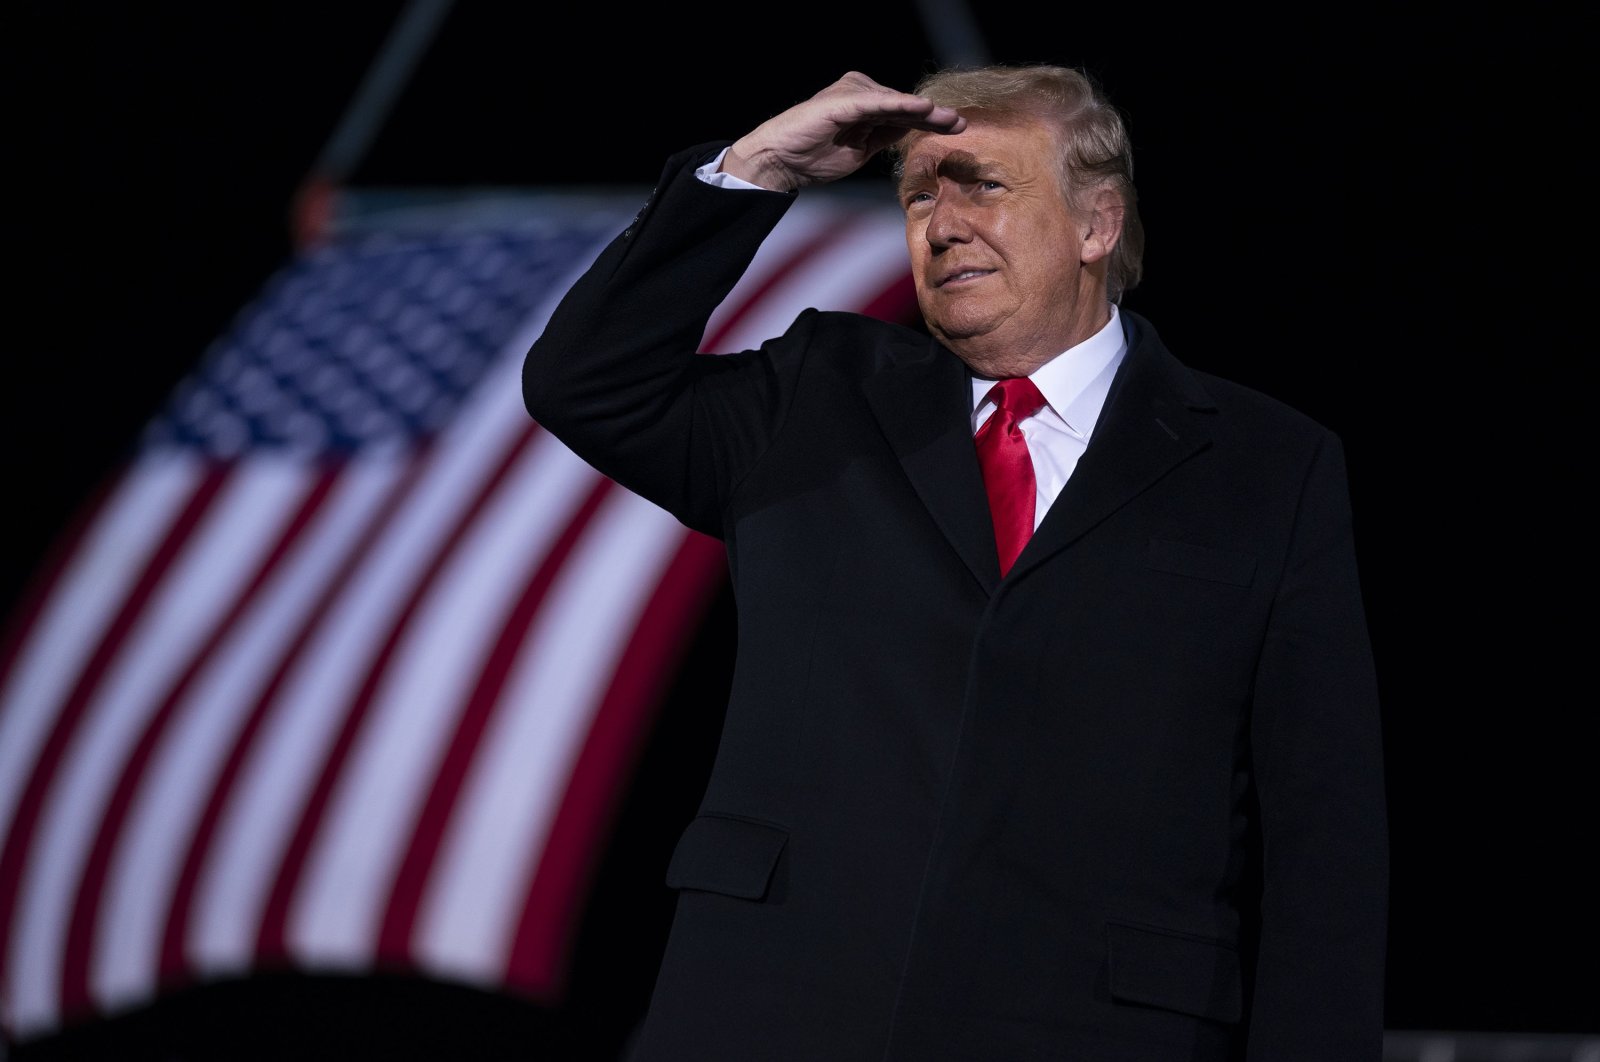 President Donald Trump arrives to speak at a campaign rally in Dalton, Ga. Jan. 4, 2021. (AP Photo)